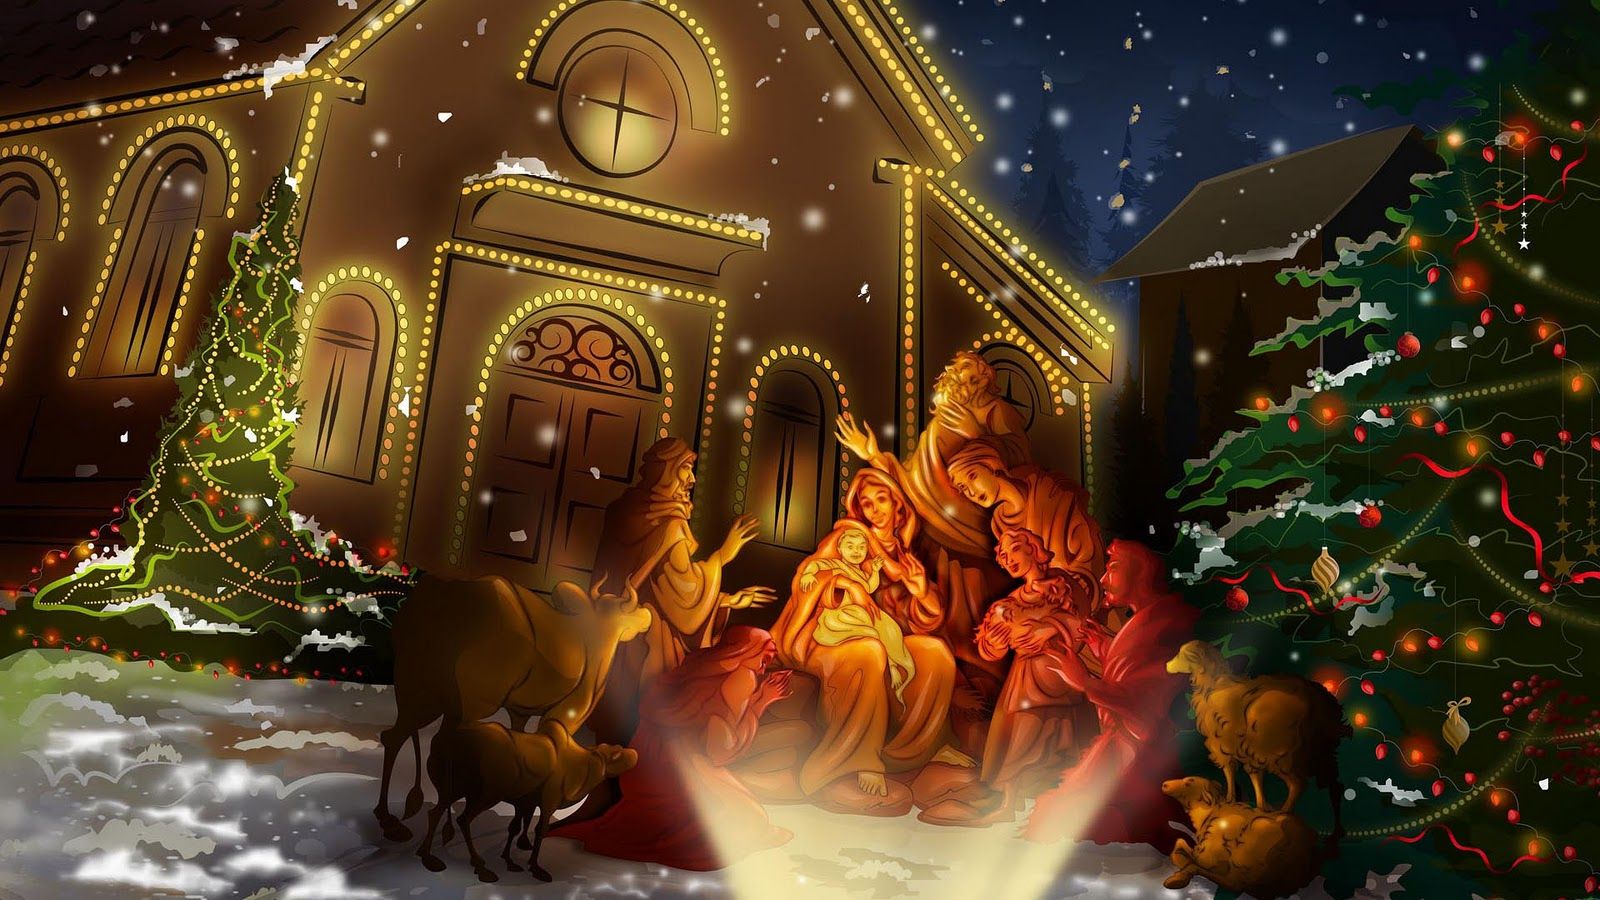 Fondos de pantalla Hd Navidad - Christmas Scene Facebook Cover (# 421104